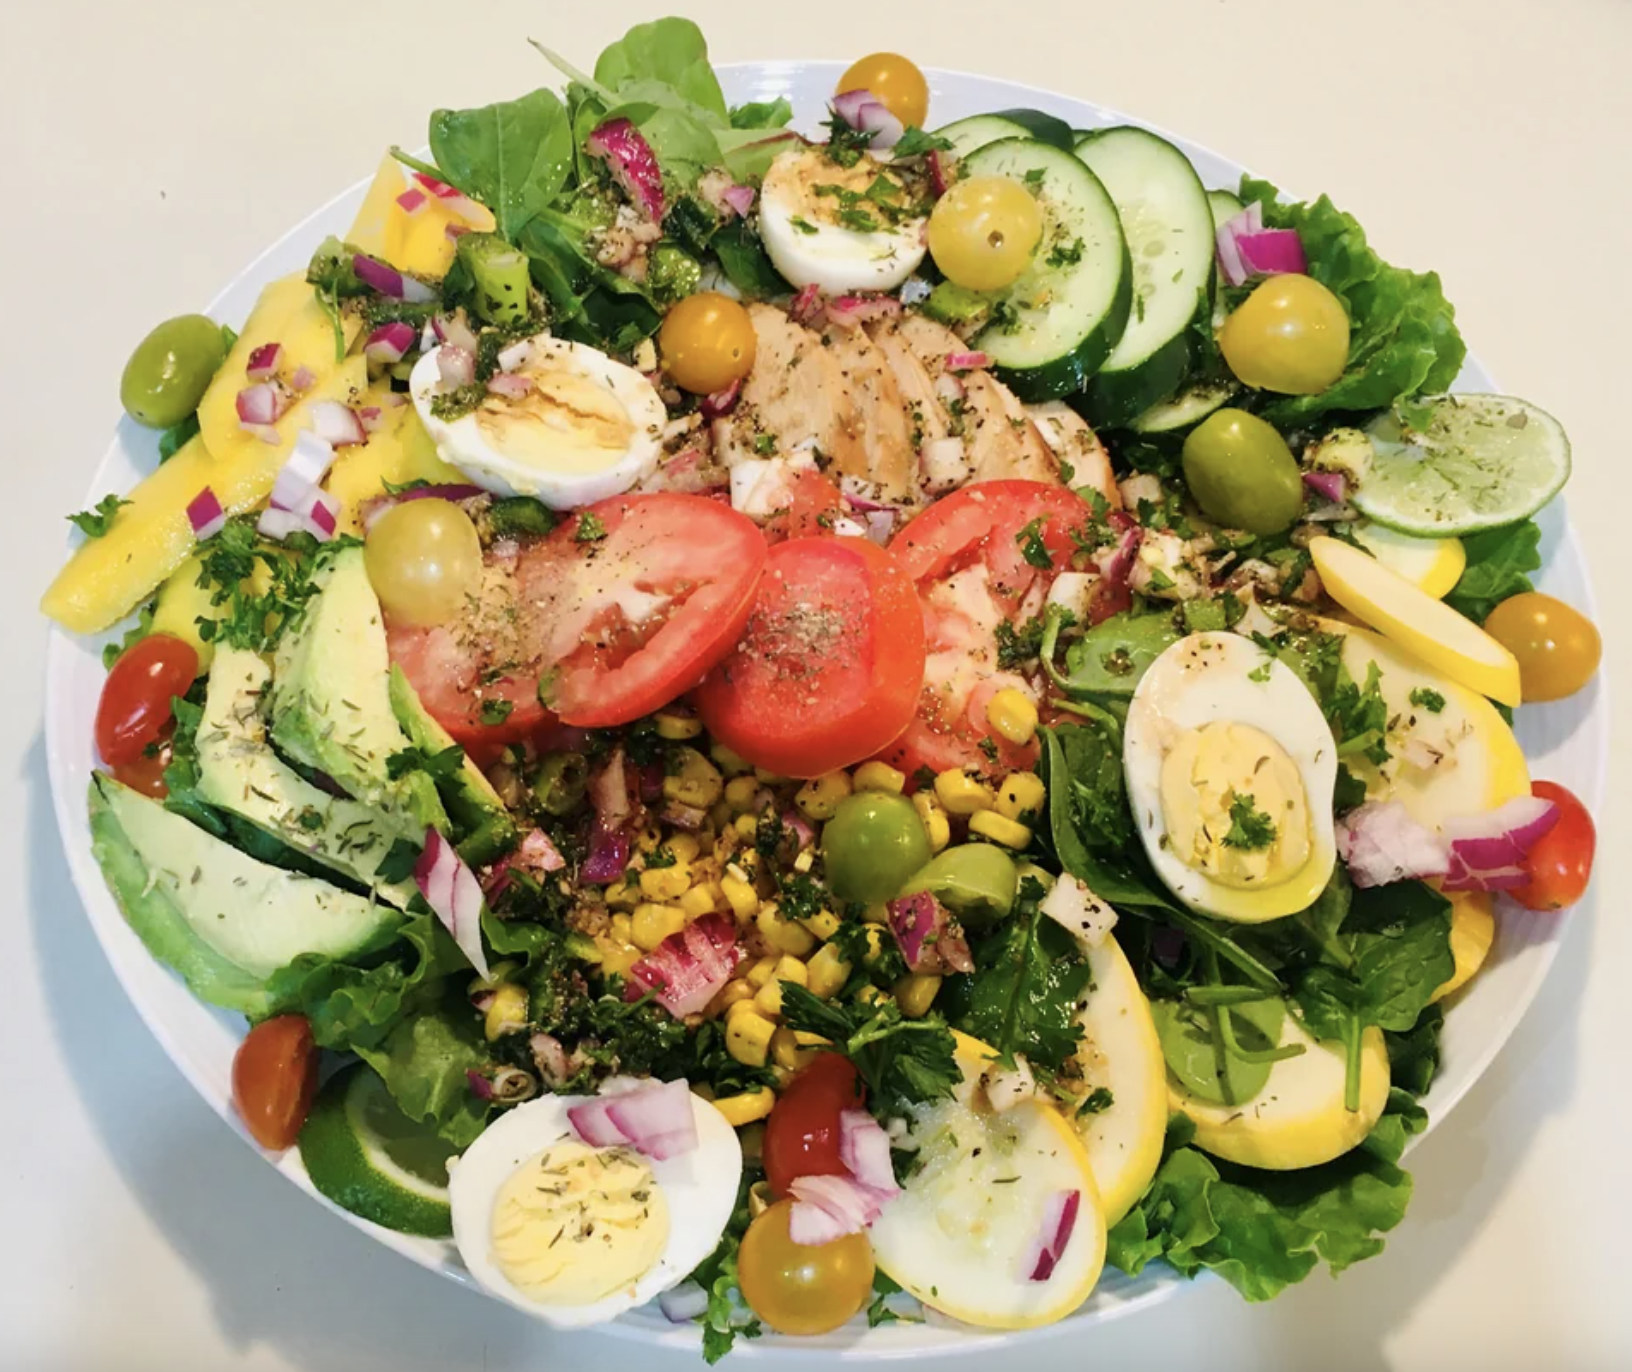 big bowl of salad with eggs tomatos avocado and more veggies